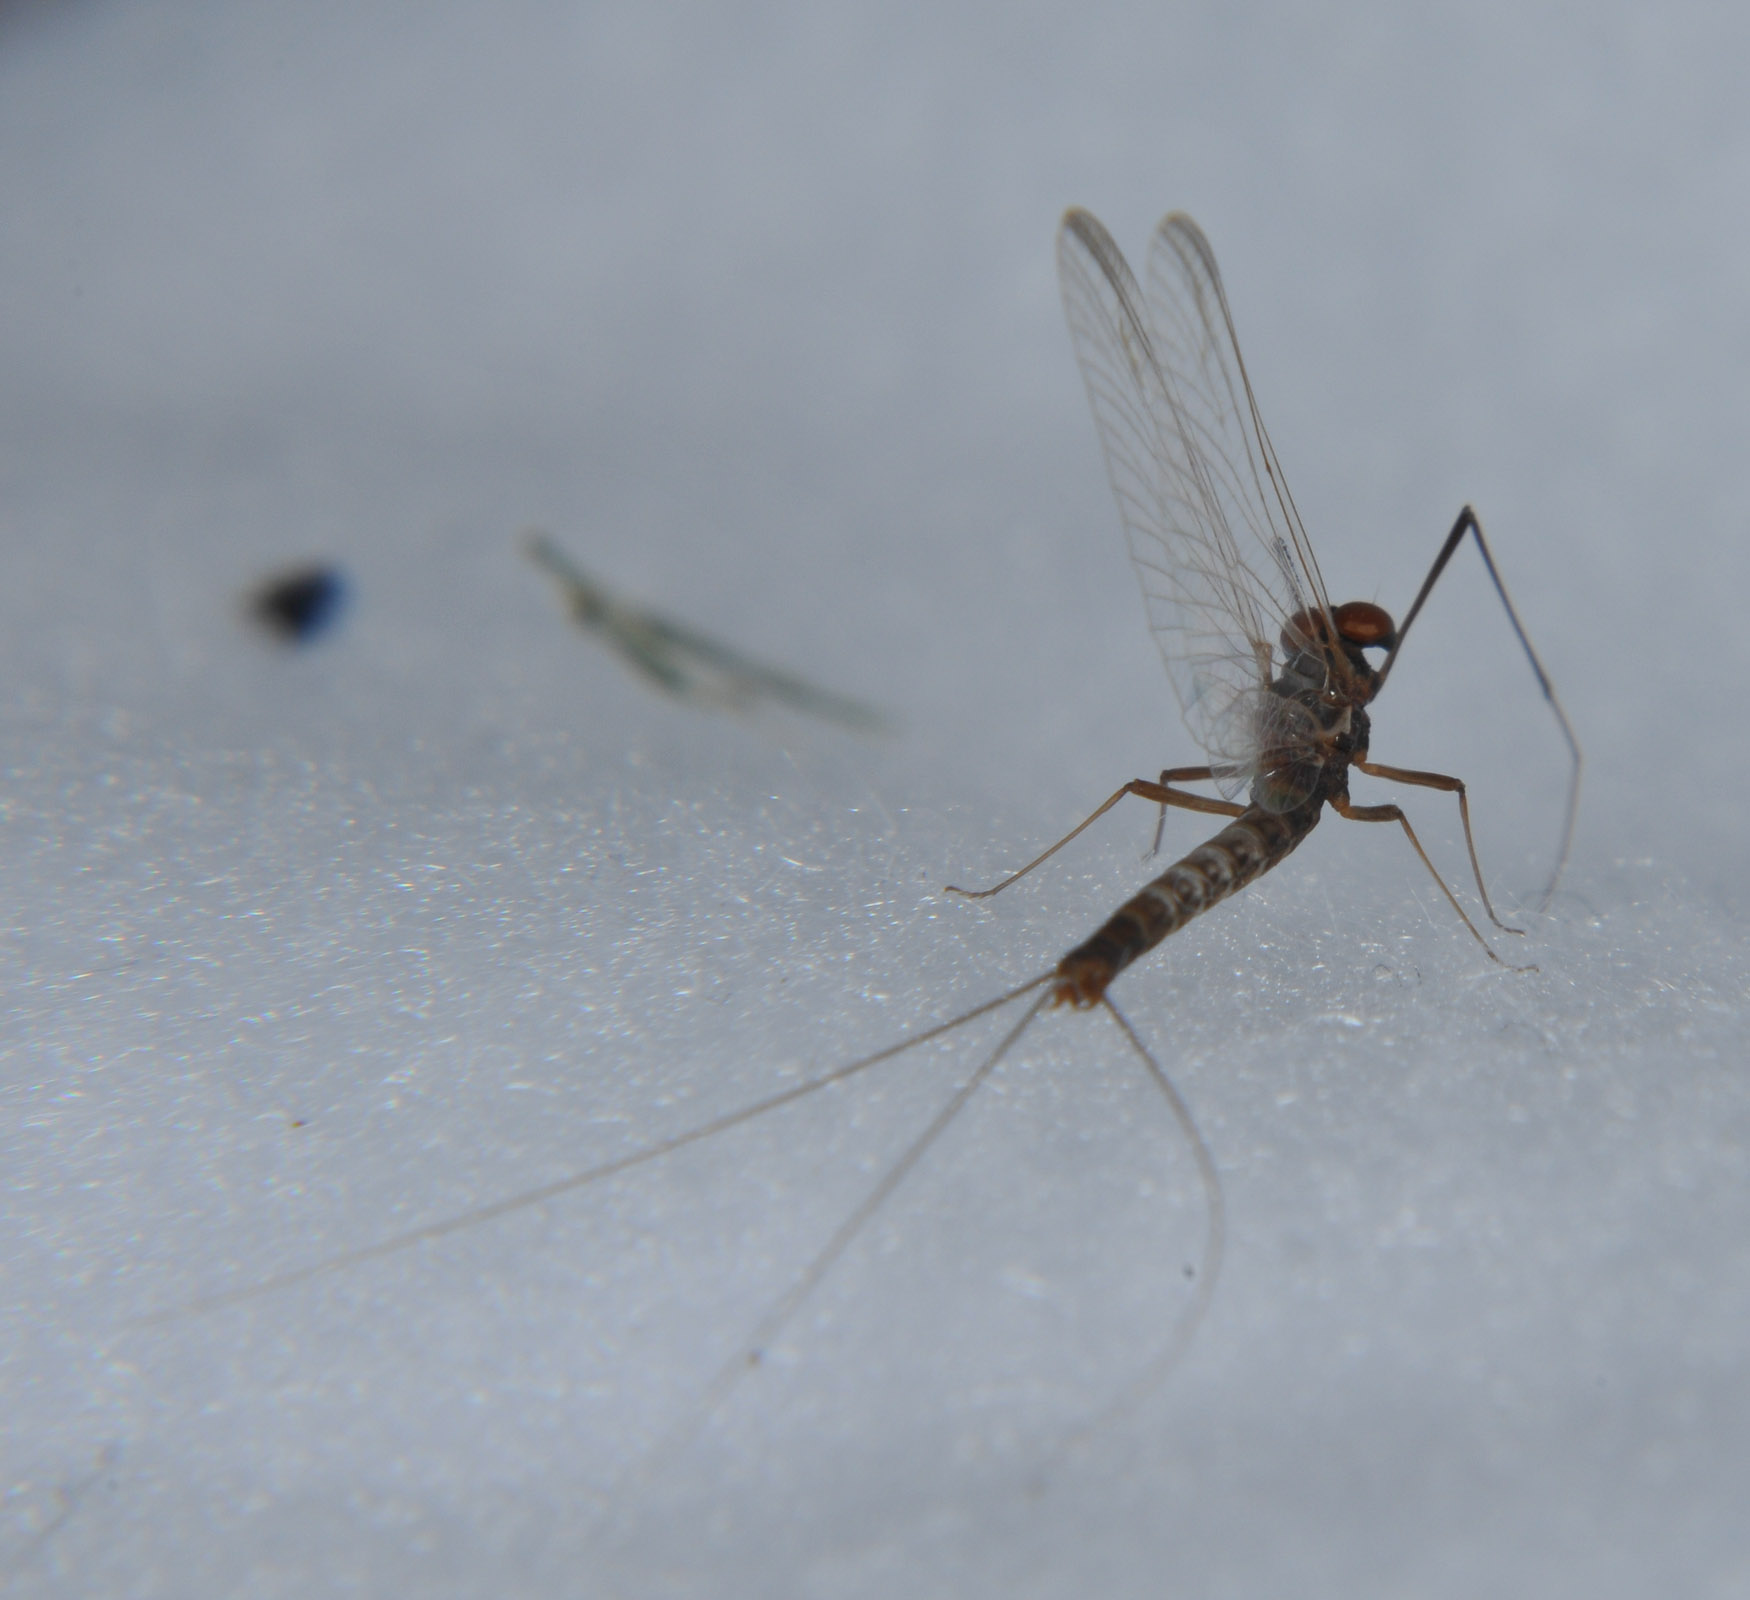 Male Paraleptophlebia bicornuta (Mahogany Dun) Mayfly Spinner from the Touchet River in Washington